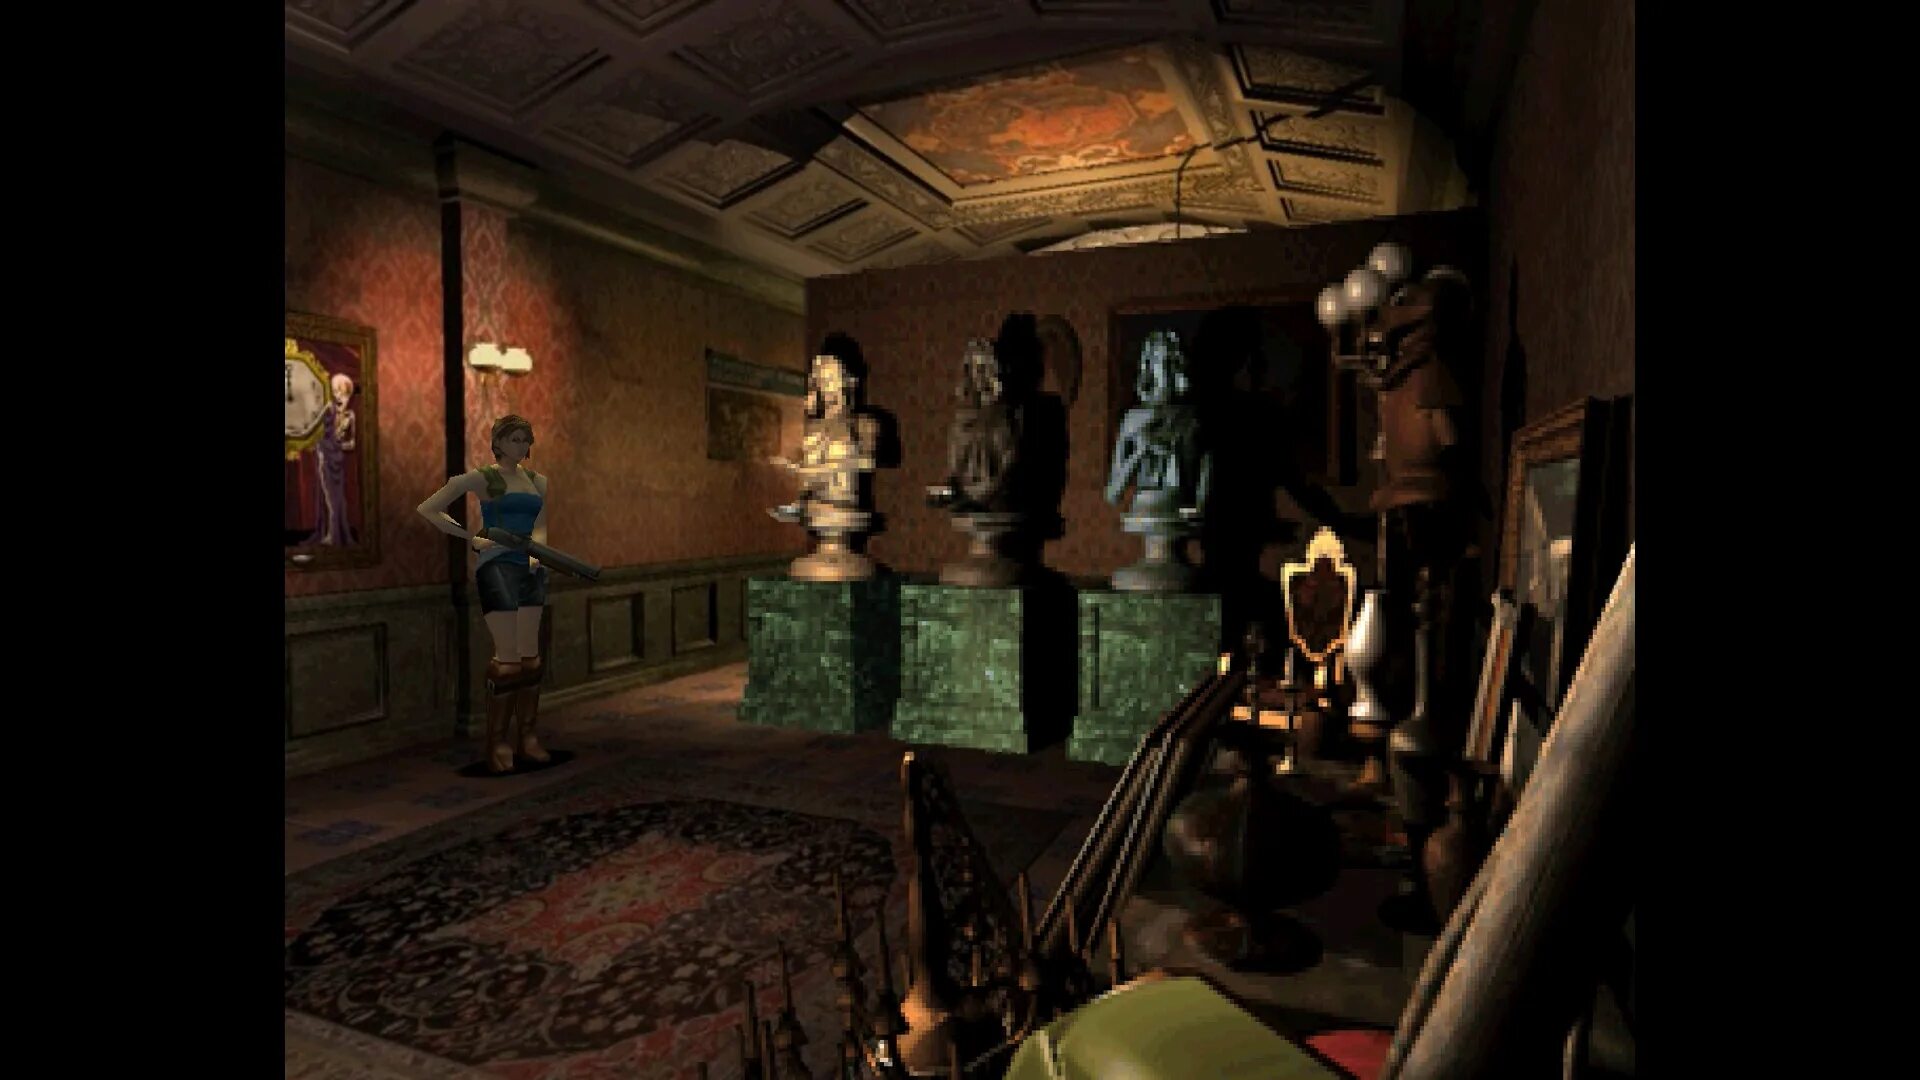 Resident Evil 3 Clock Tower. Resident Evil 3 Немезис часовая башня. Часовая башня Resident Evil 2. Часовая башня резидент эвил 2 ремейк.